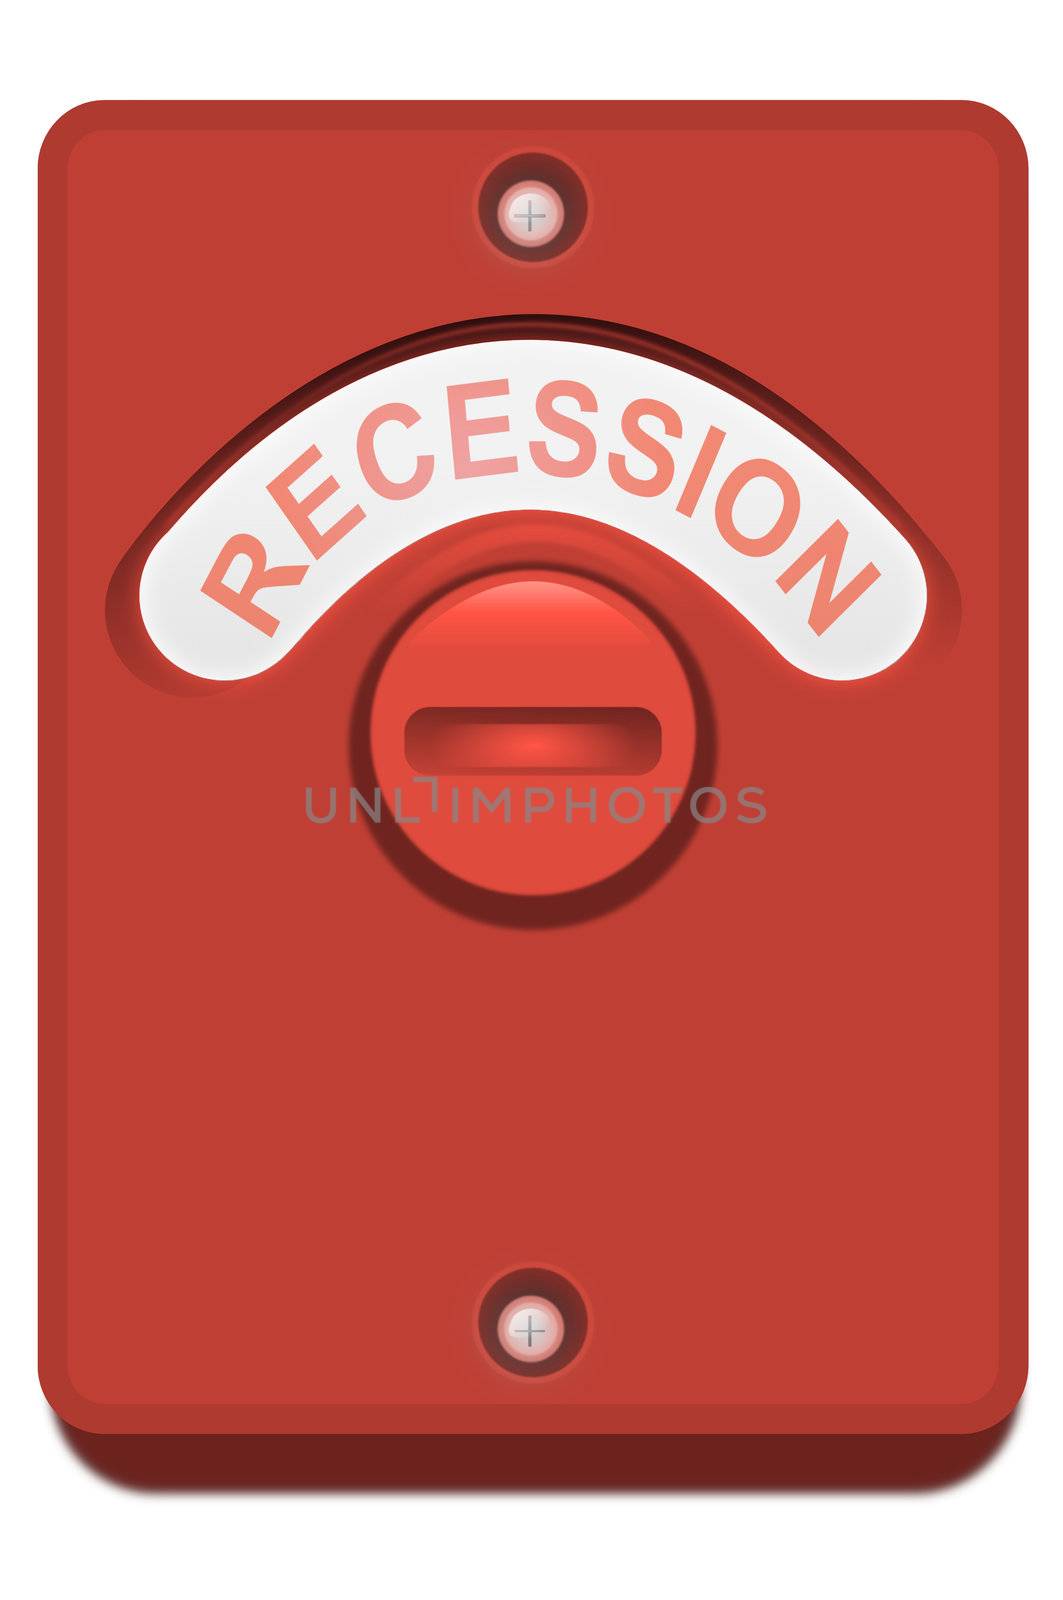 Recession concept. by 72soul